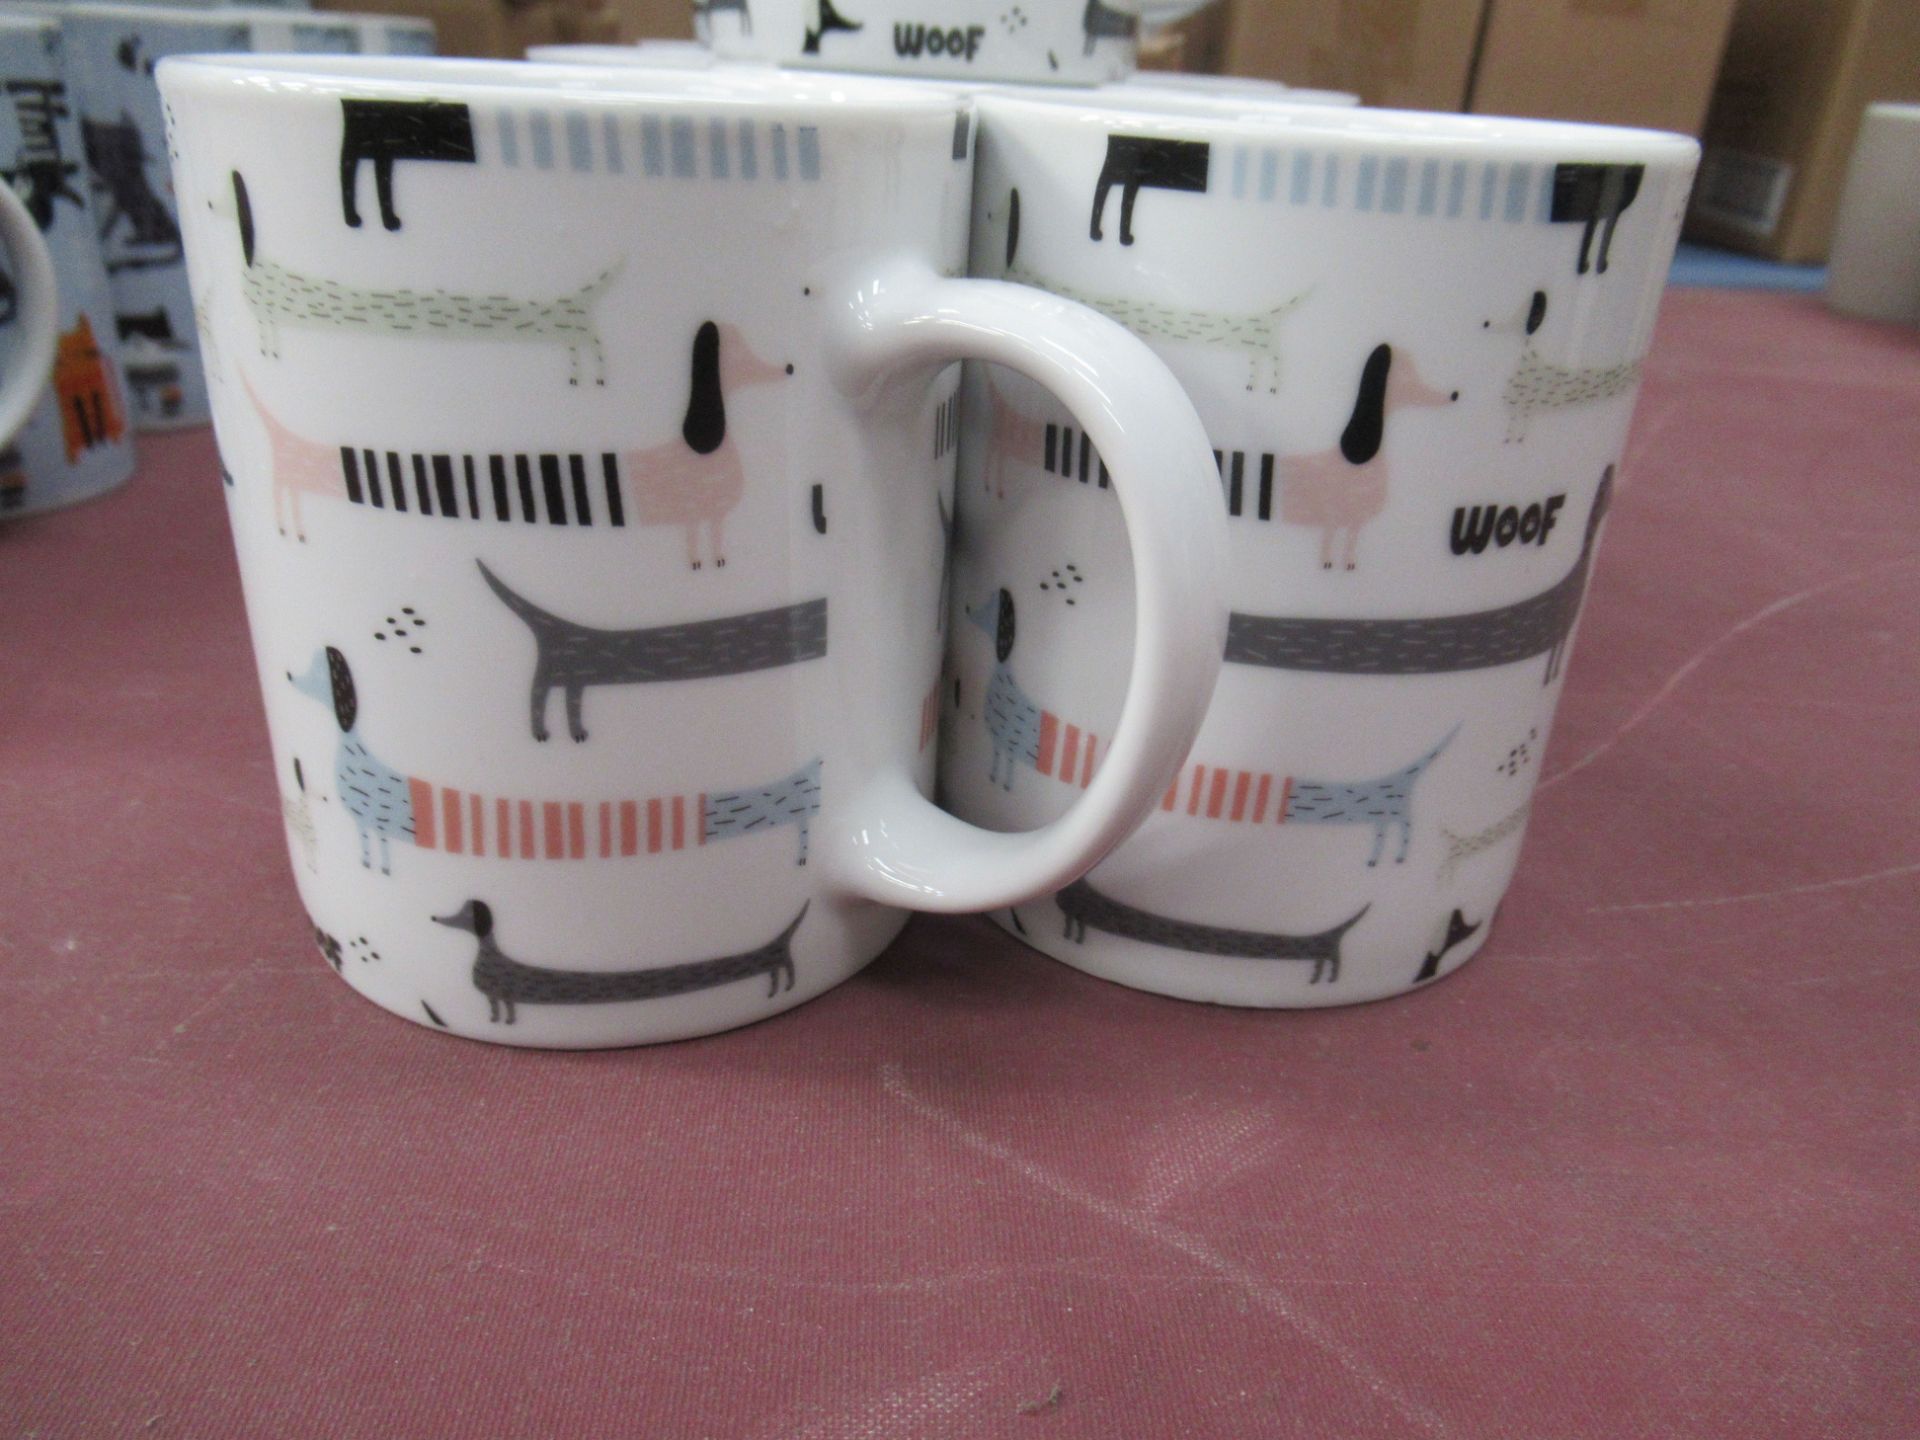 A Selection of Dog Patterned Tea Mugs - Image 2 of 2